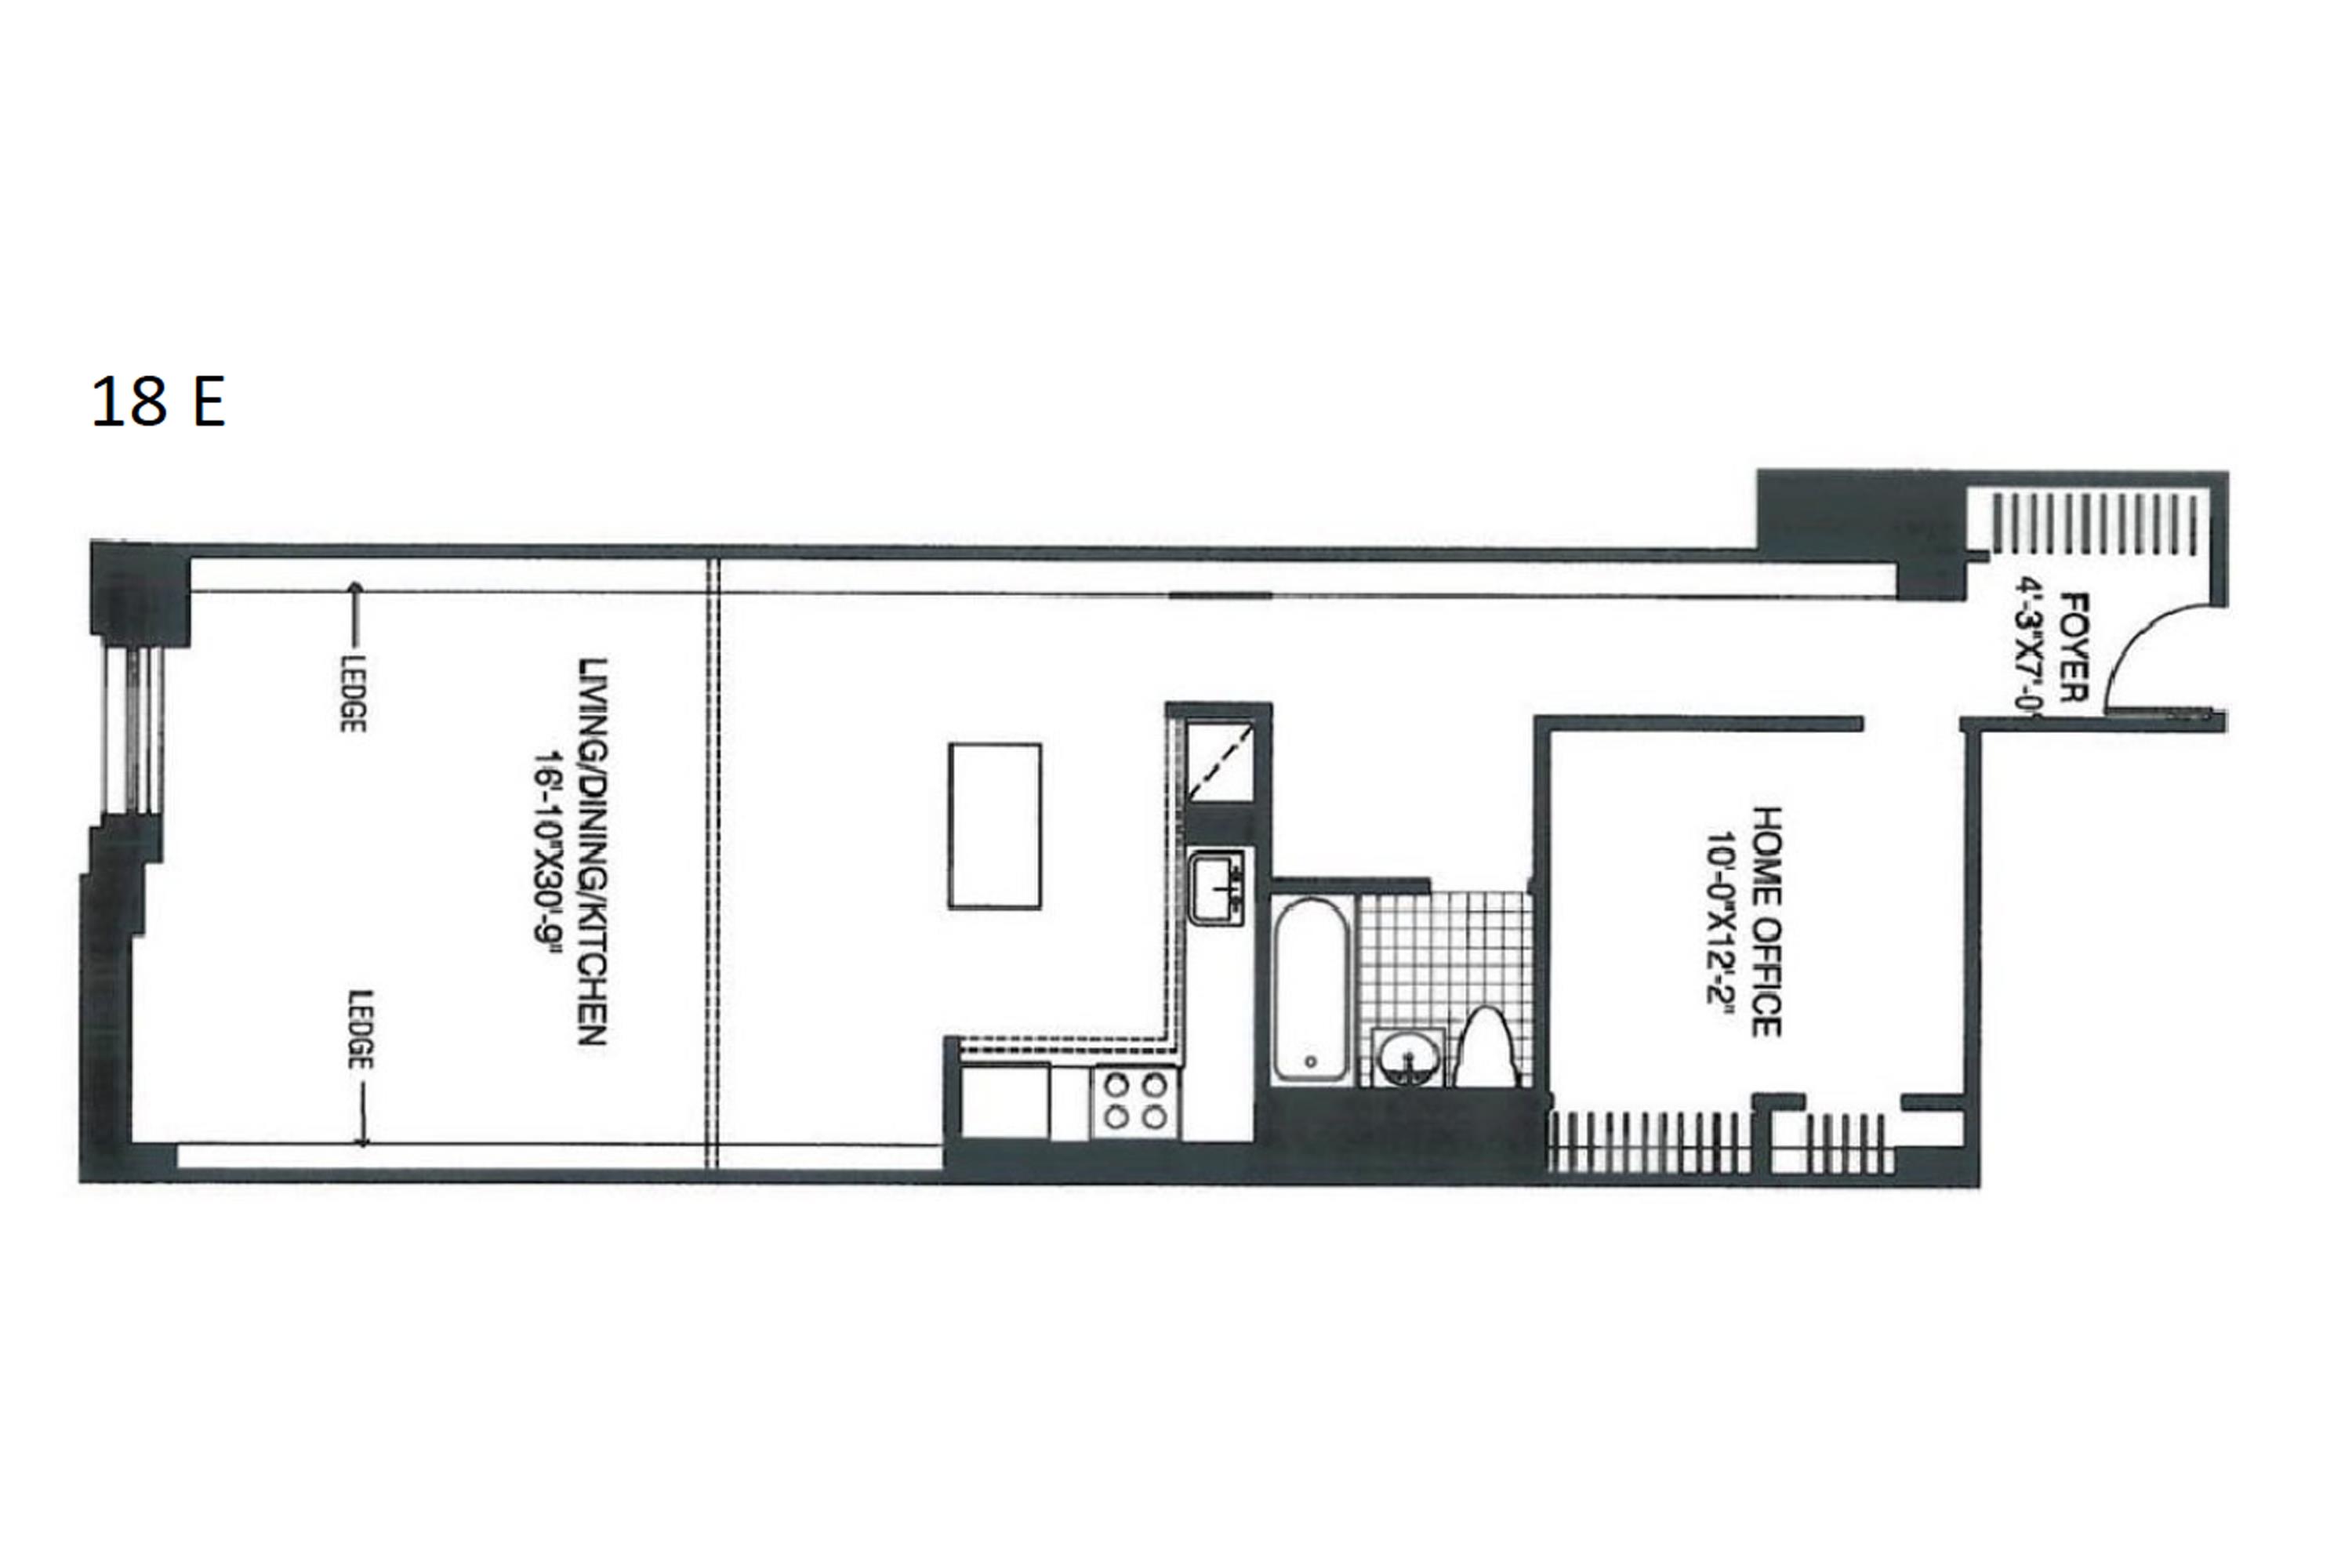 Floorplan for 20 West Street, 18-E